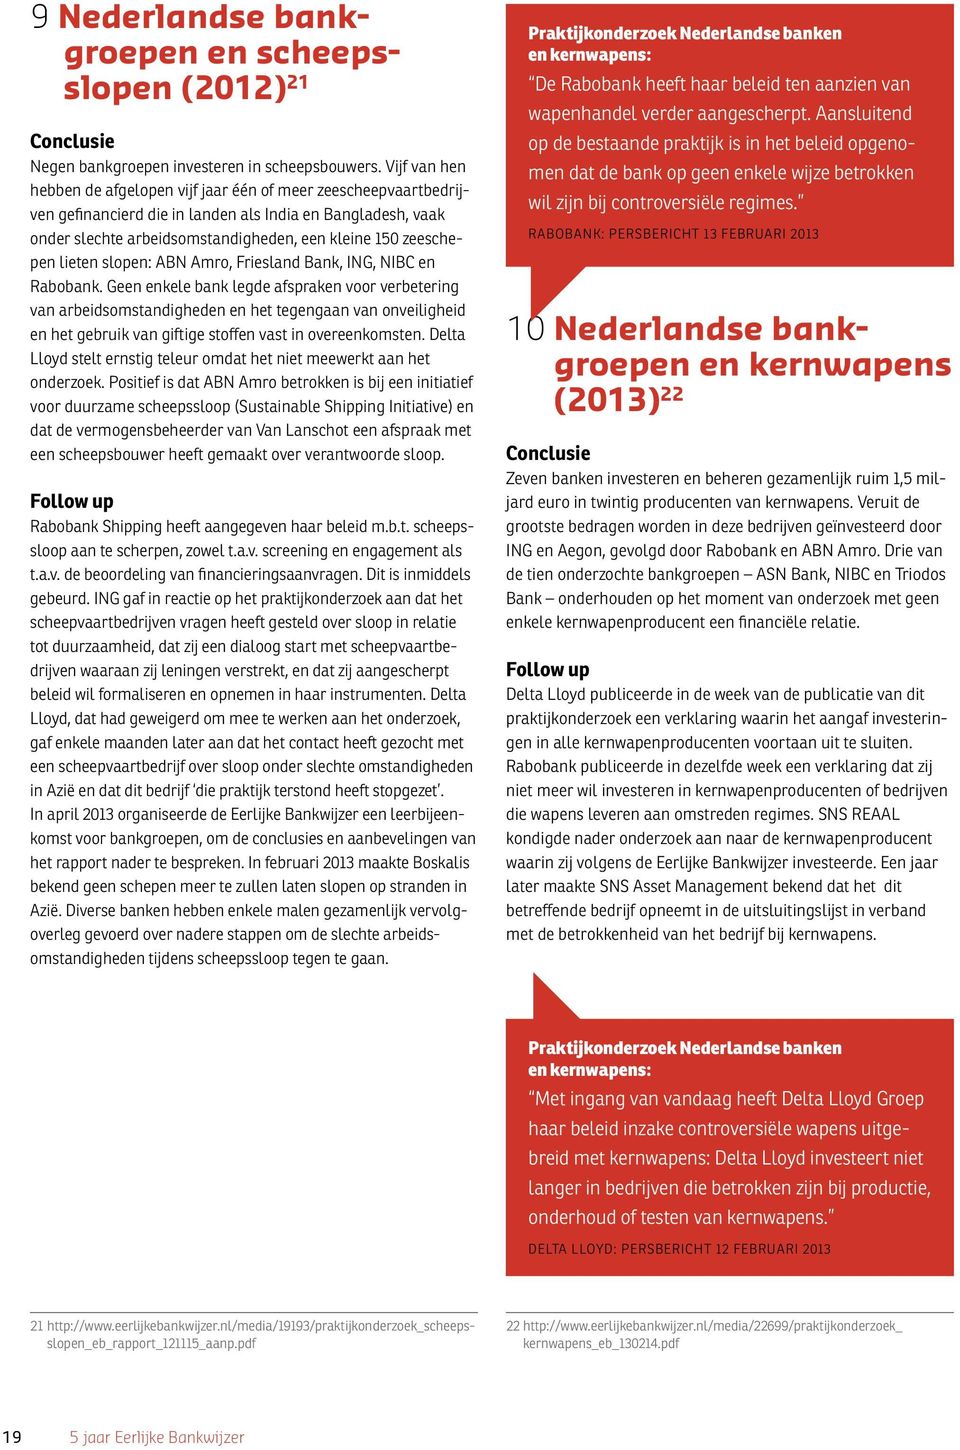 lieten slopen: ABN Amro, Friesland Bank, ING, NIBC en Rabobank.